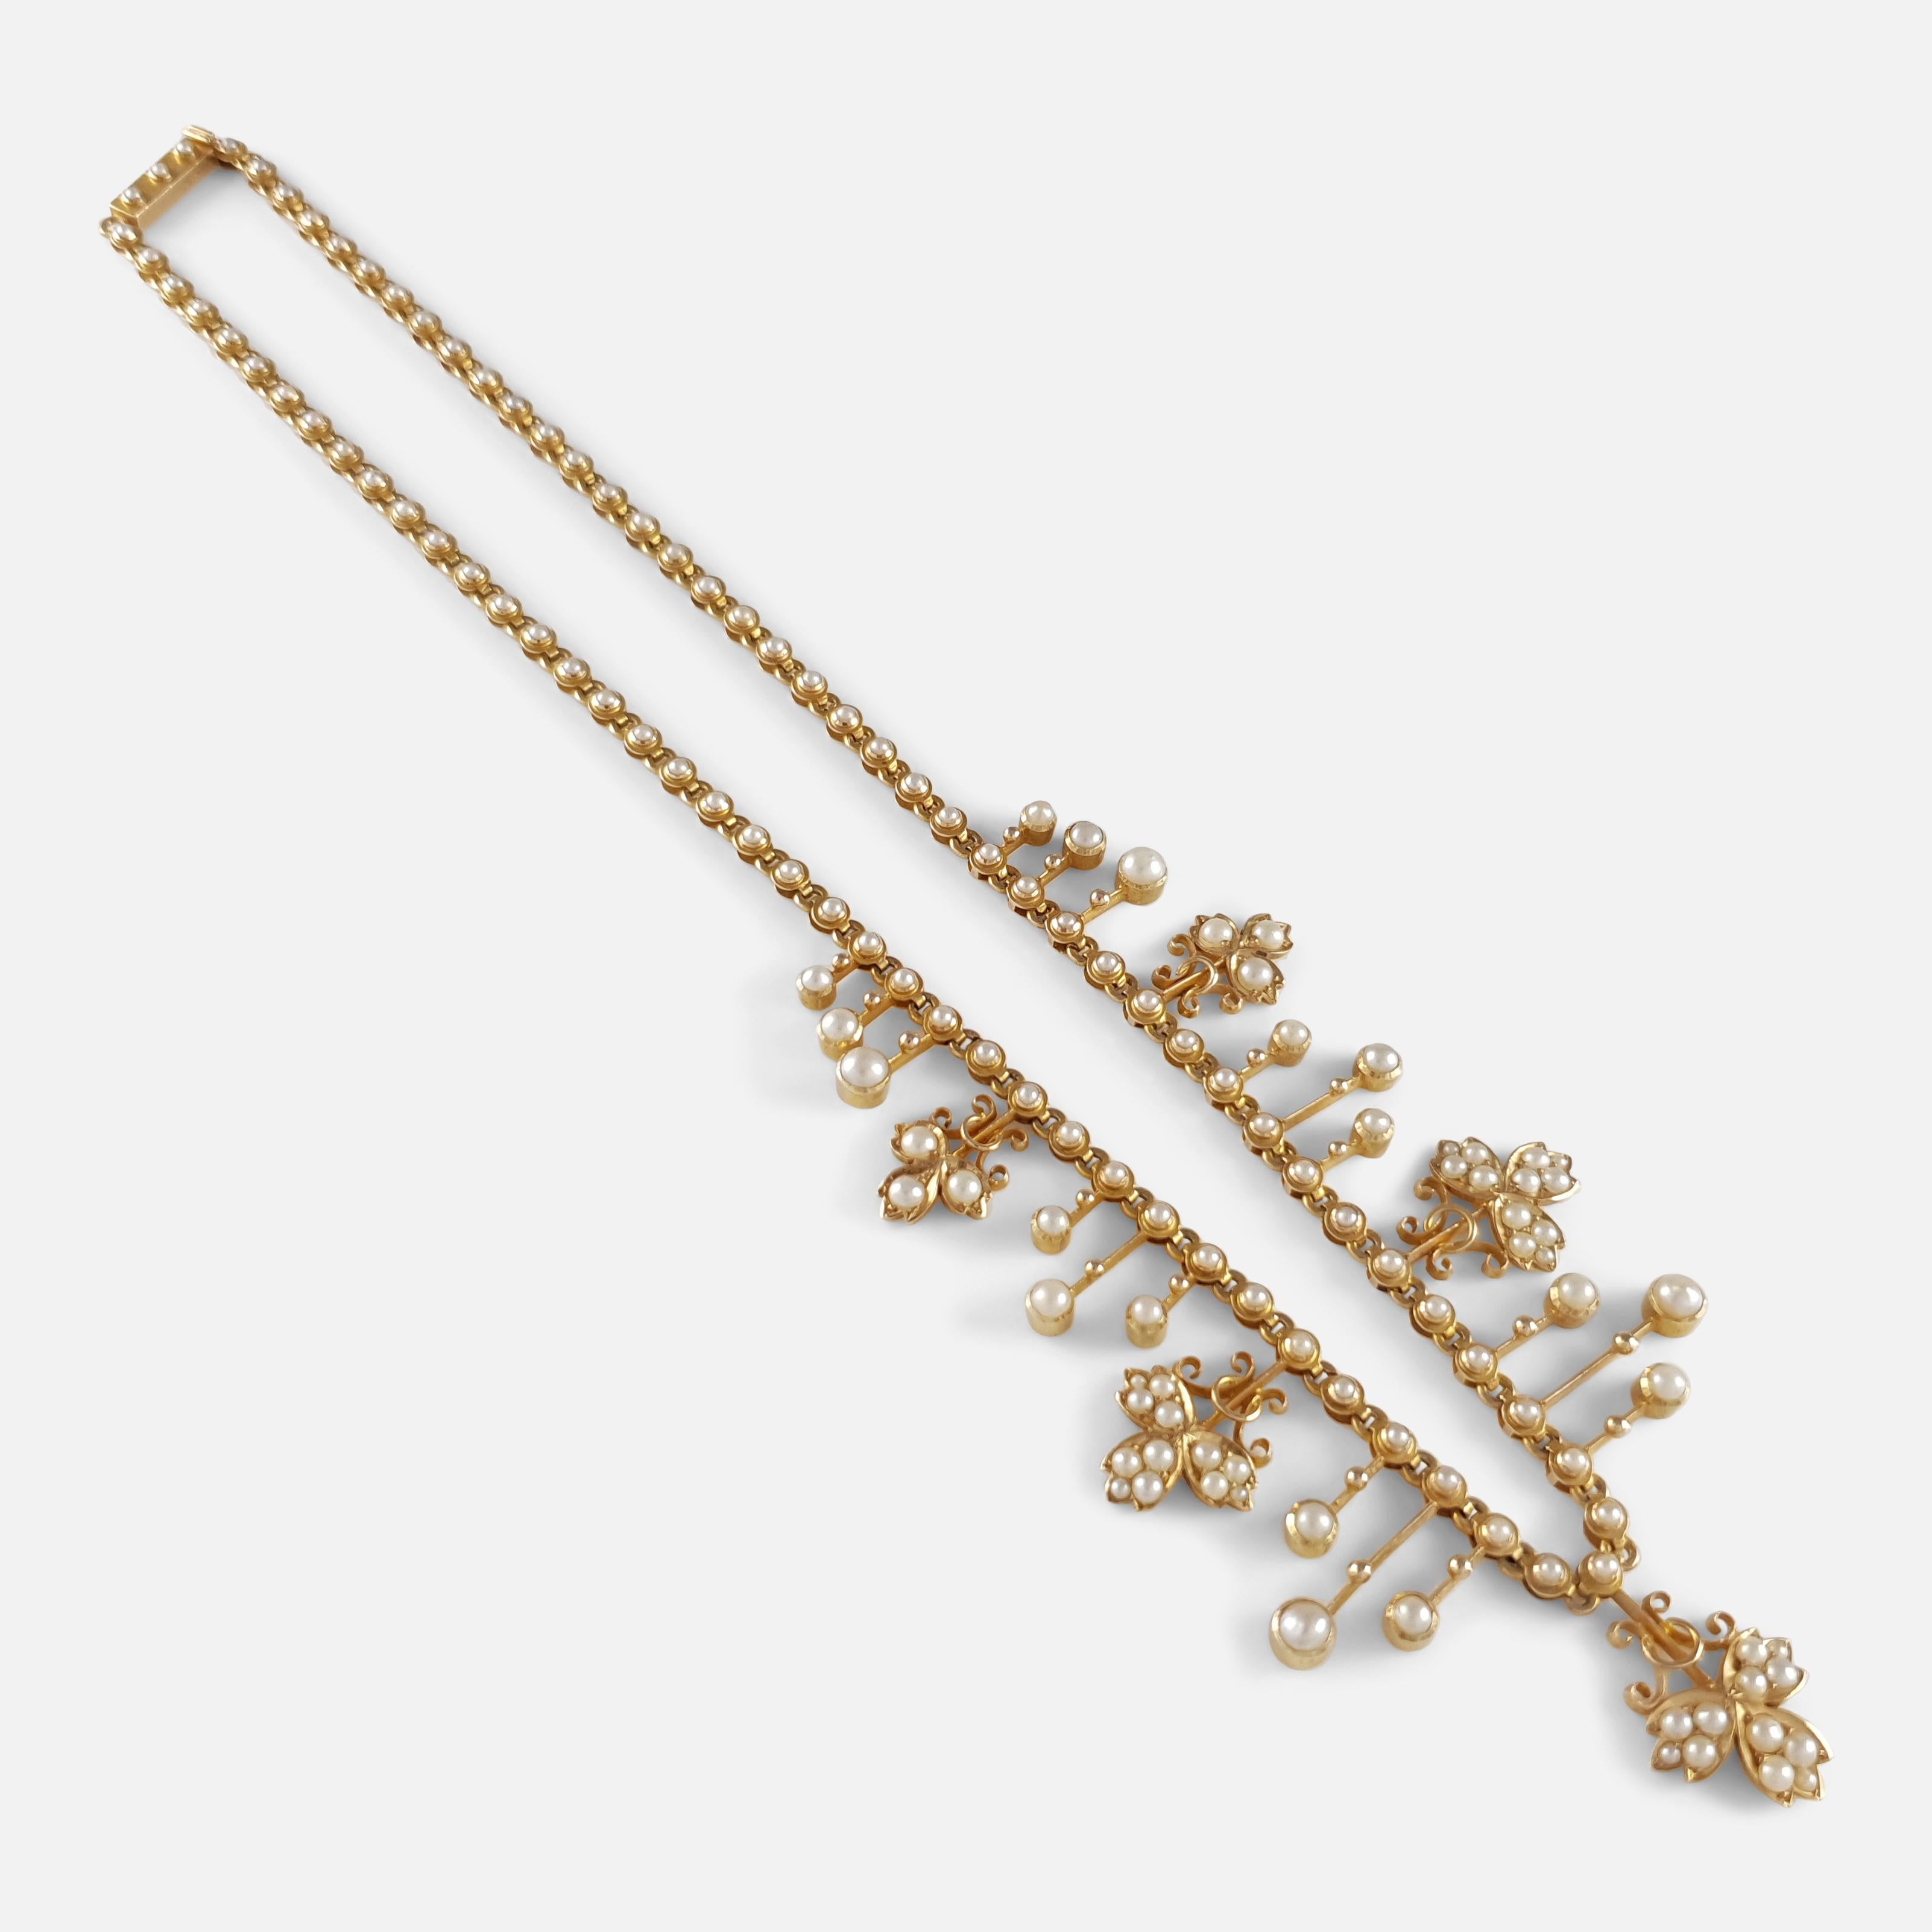 Women's Edwardian 15 Karat Yellow Gold Seed Pearl Fringe and Foliate Necklace circa 1905